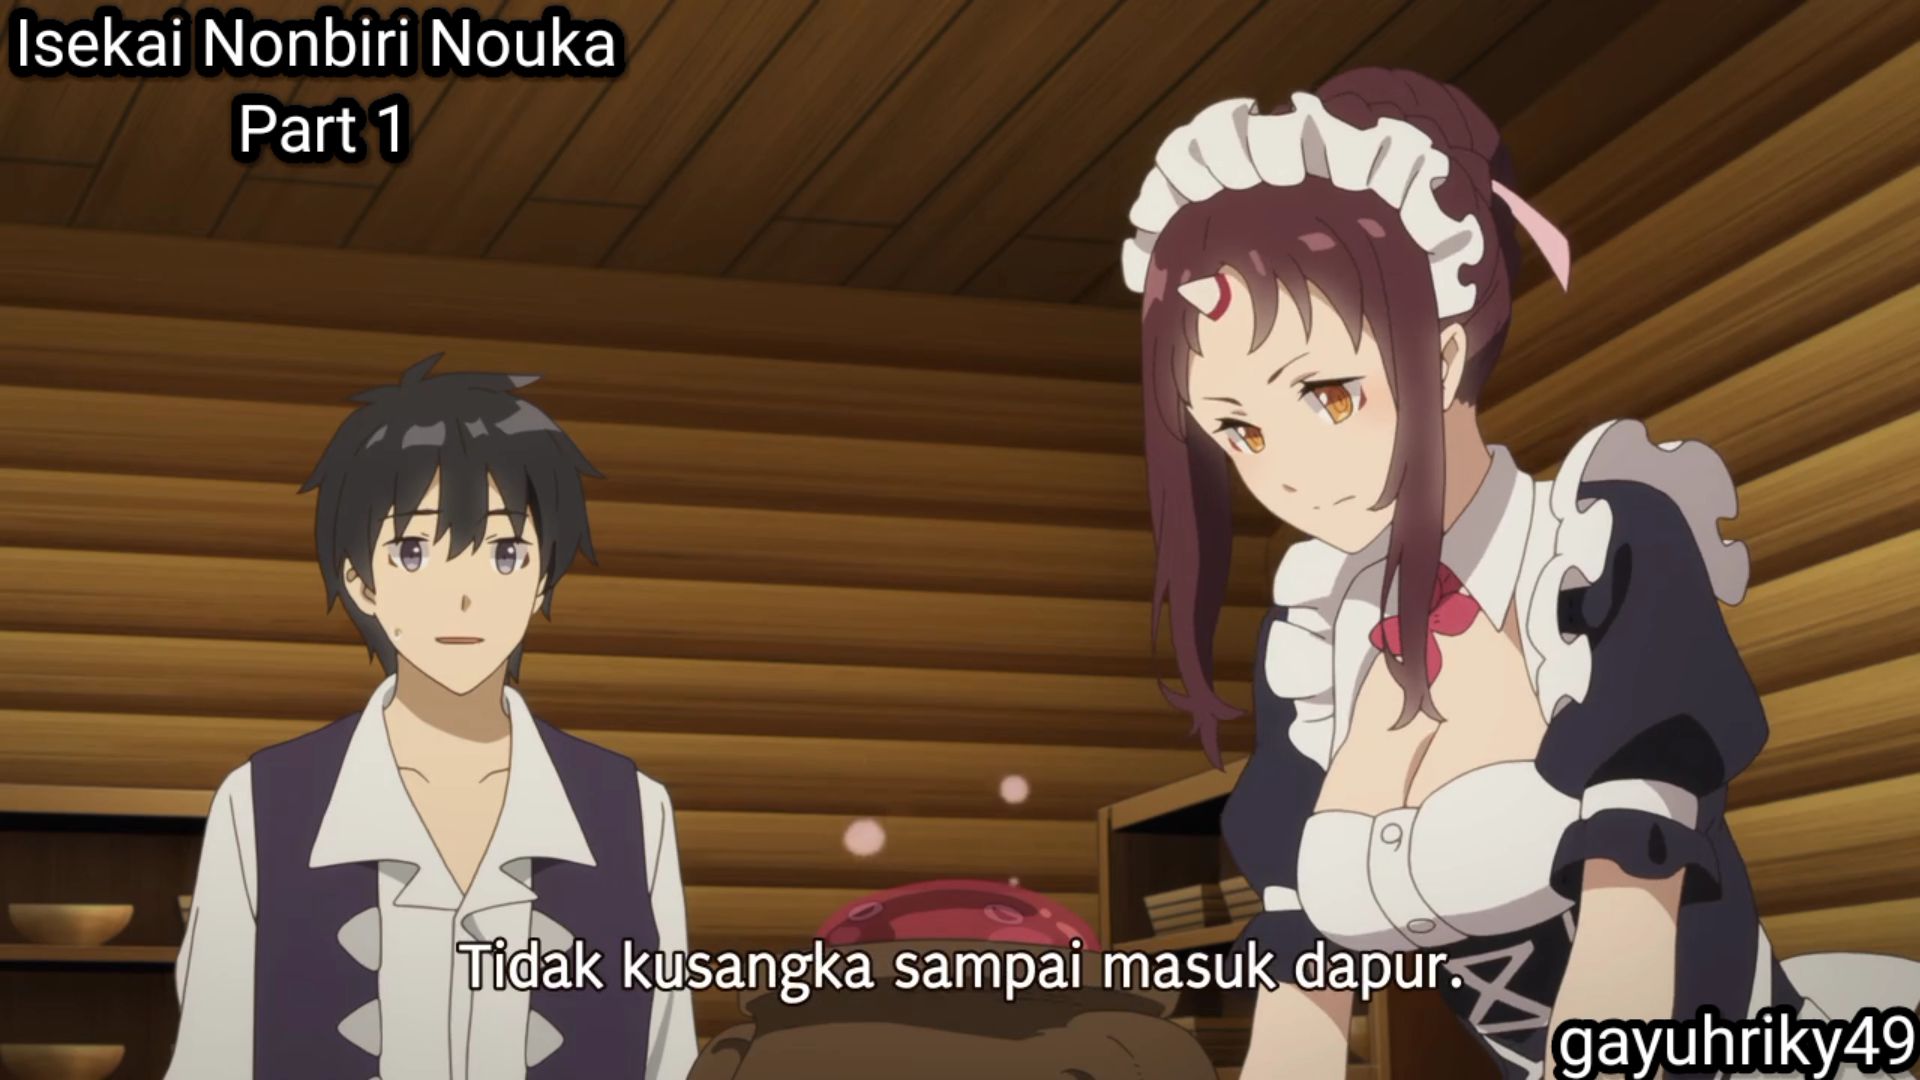 Isekai Nonbiri Nouka Episode 1 Subtitle Indonesia - SOKUJA